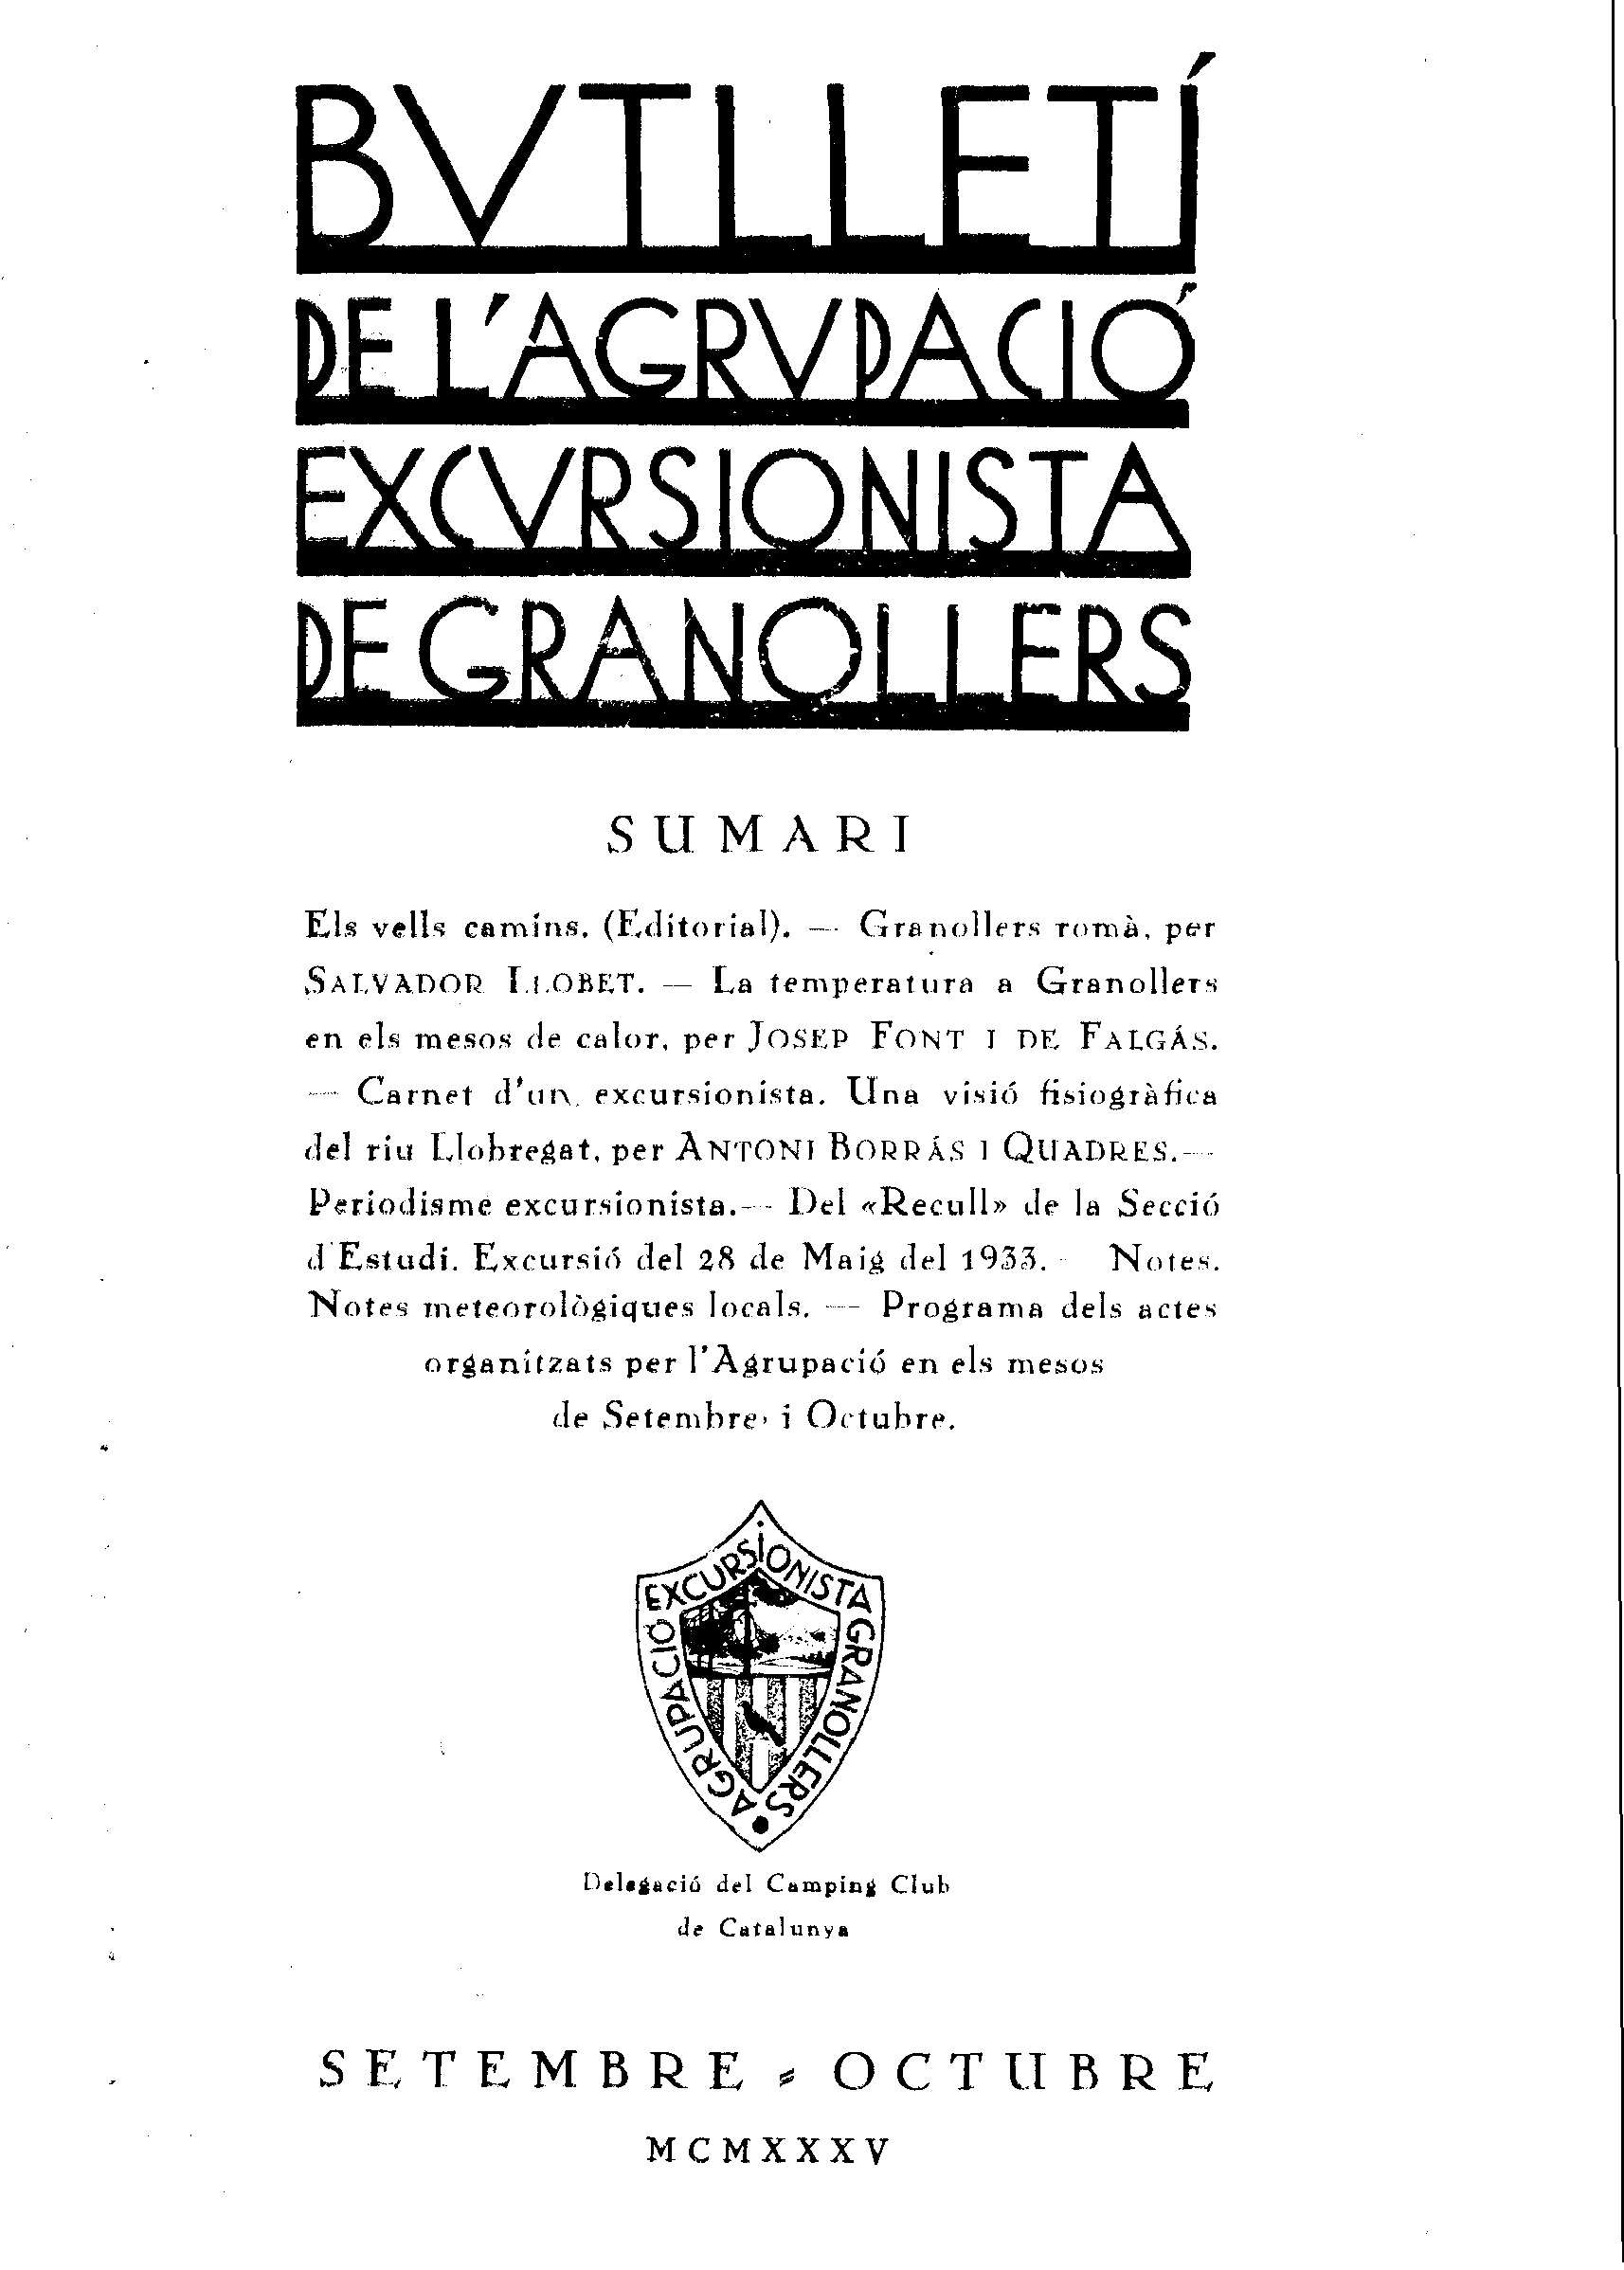 Butlletí de l'Agrupació Excursionista de Granollers, 1/9/1935 [Issue]